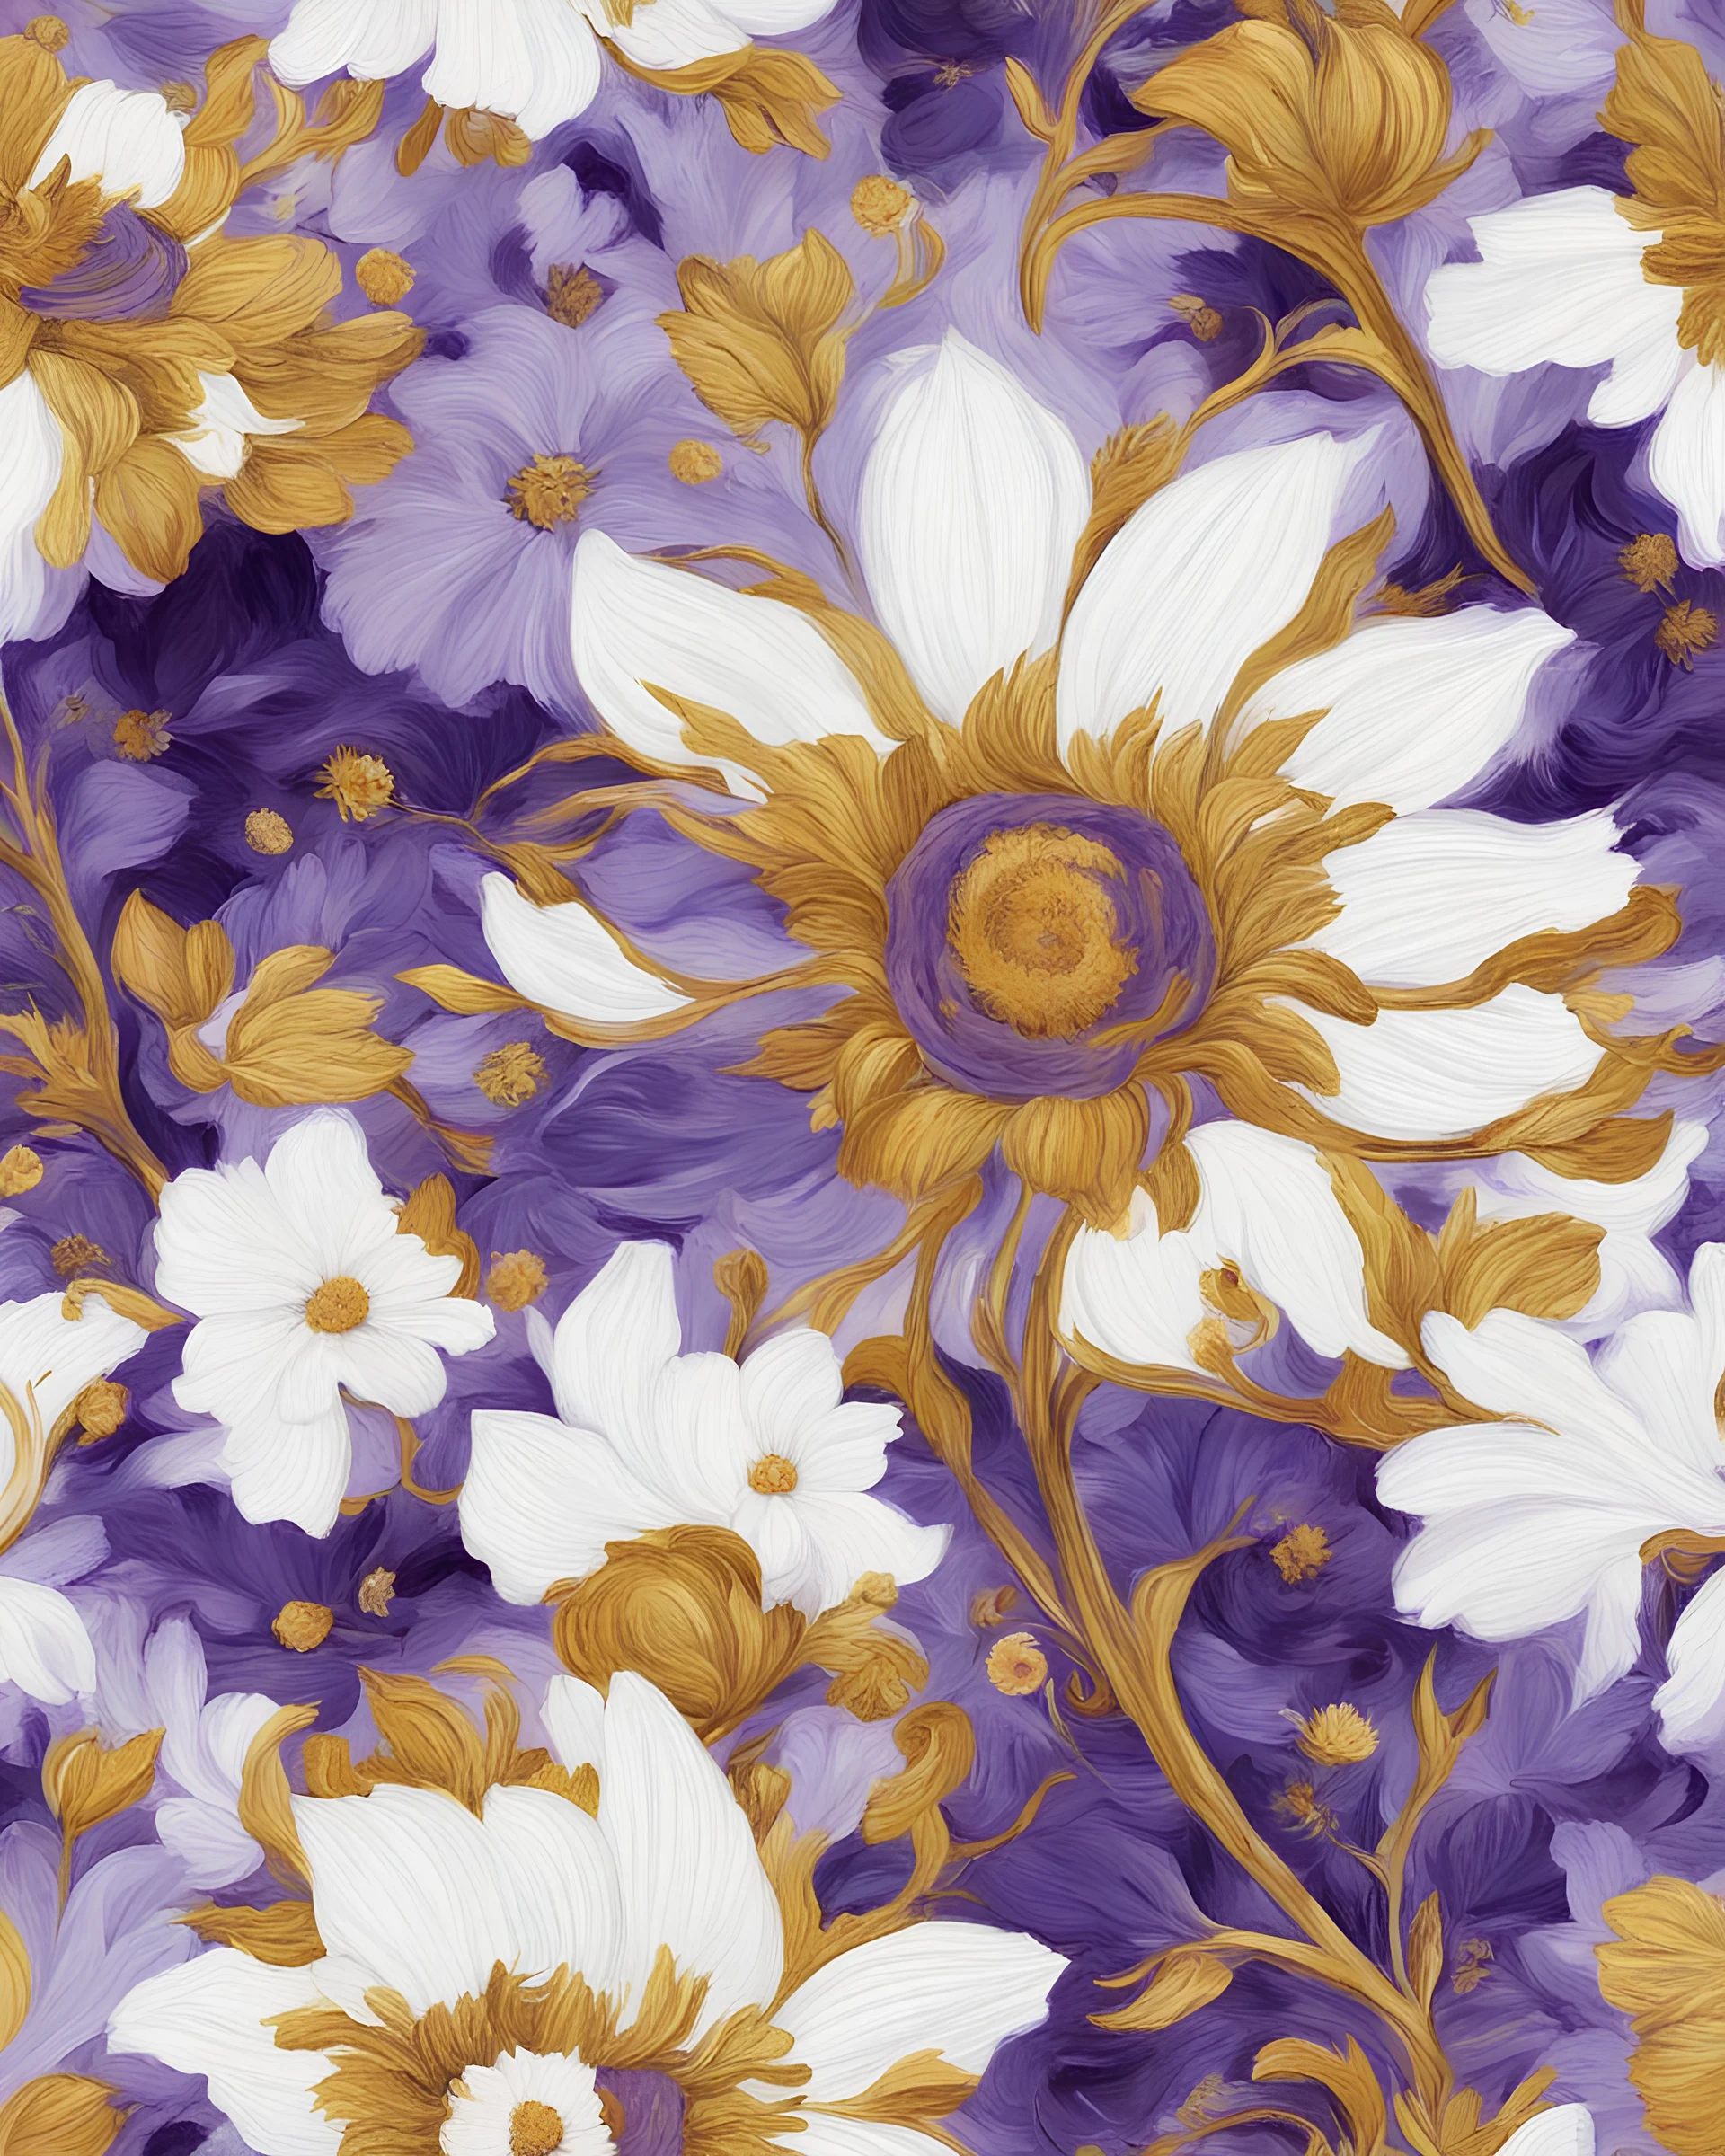 purple, white and gold flower van Gough white background